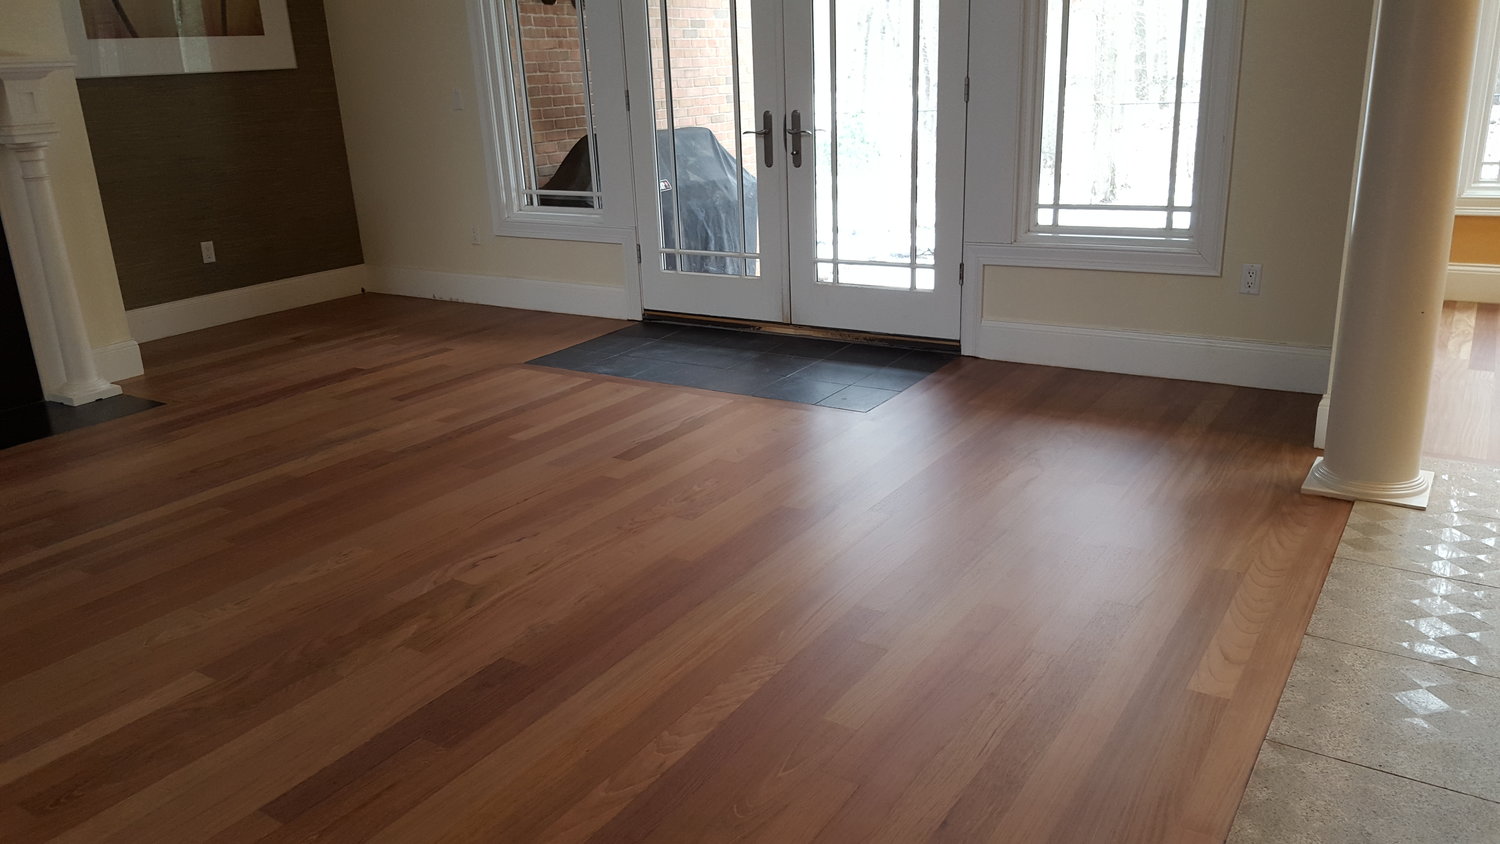 Renaissance Floor Refinishing, Henry’s Hardwood Floor Service